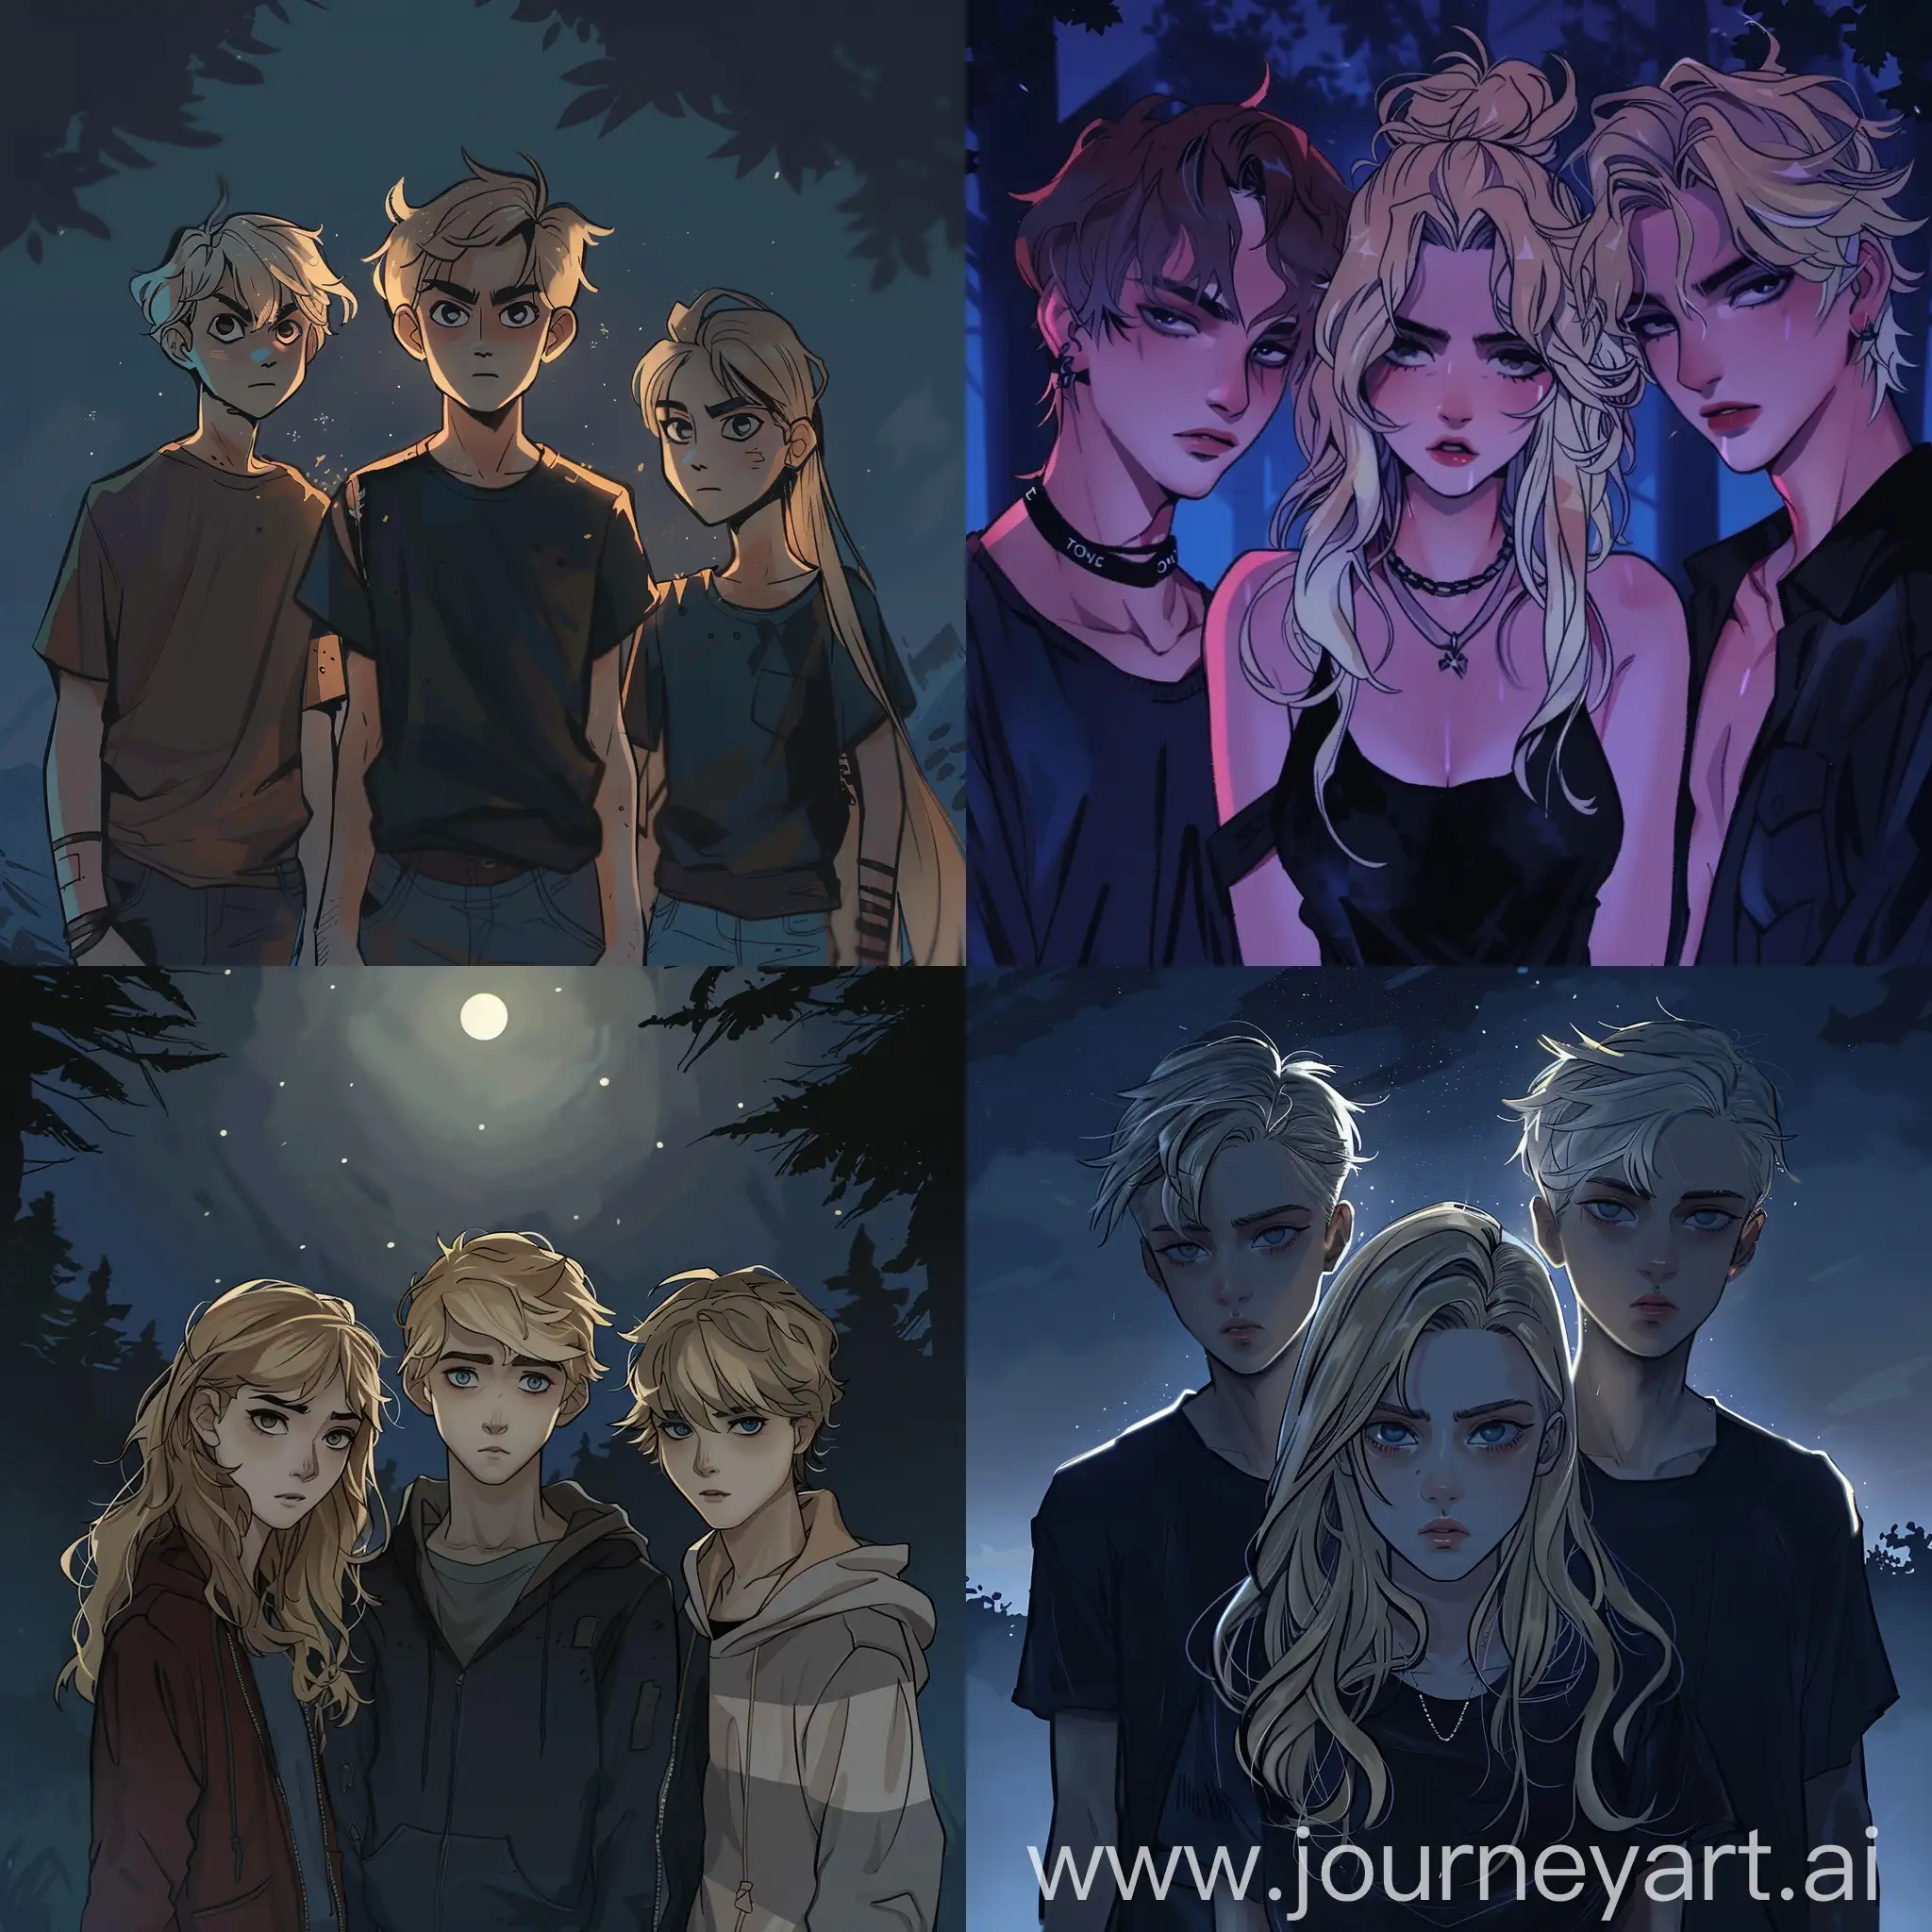 Nighttime-Bonding-Animated-Dark-Theme-with-Three-Blonde-Teenagers